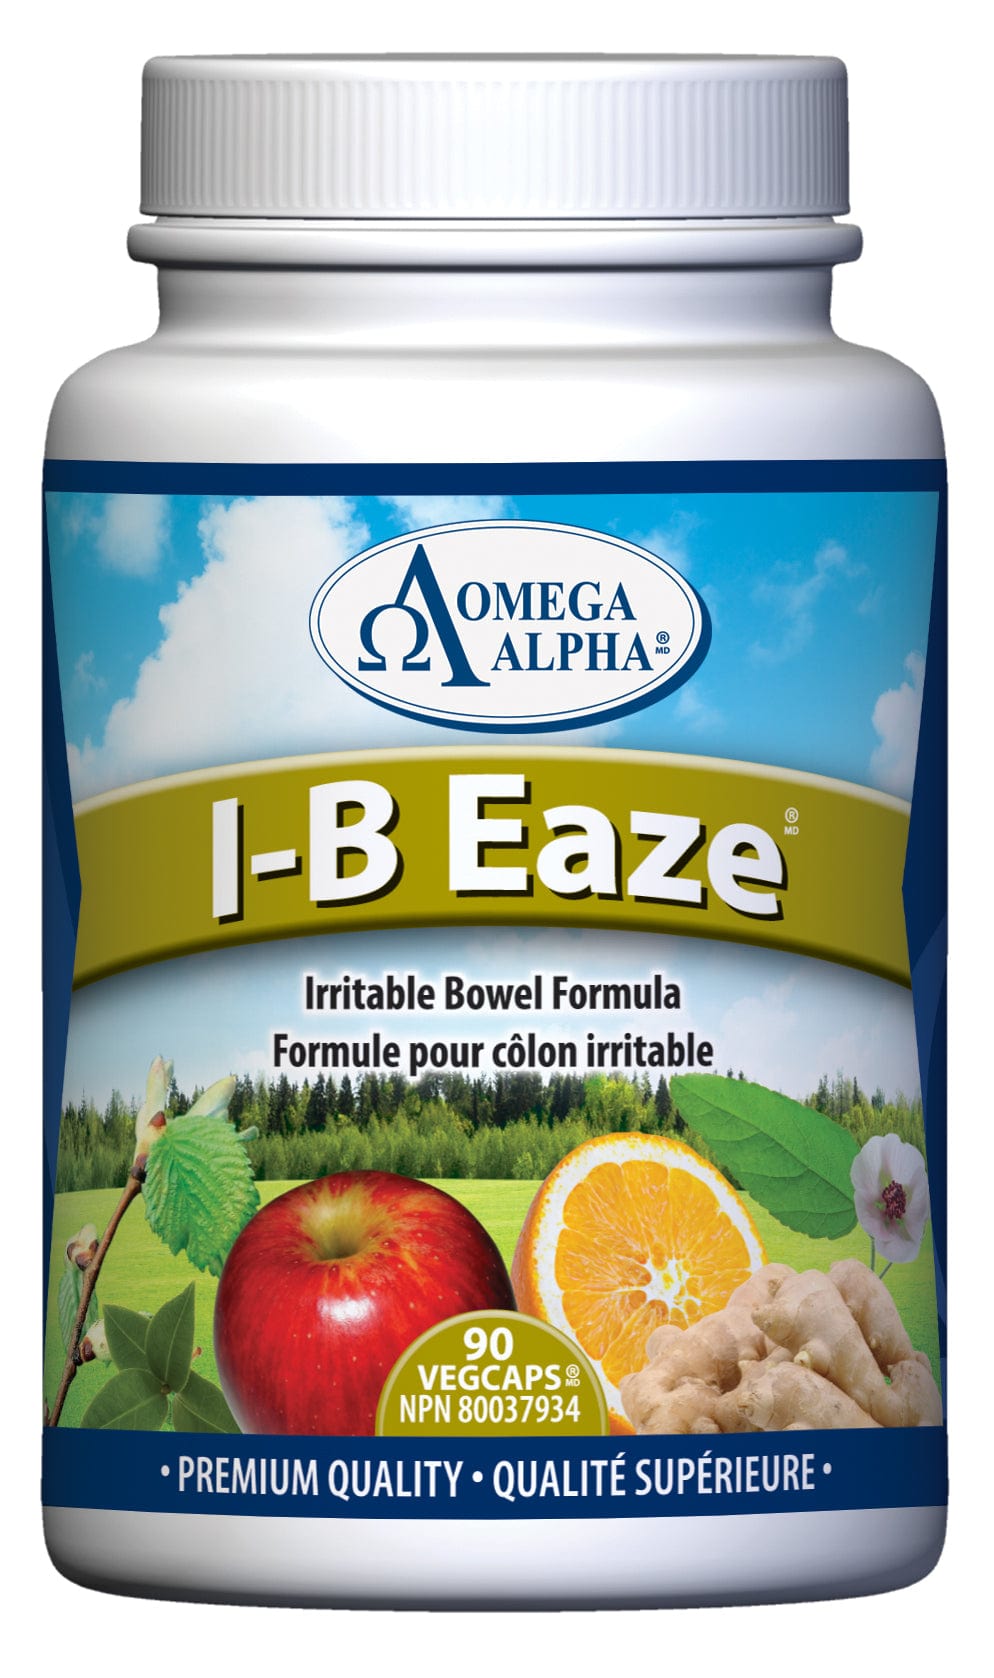 OMÉGA ALPHA PHARMATICAL Suppléments I-B eaze (formule irritation intestin) 90caps